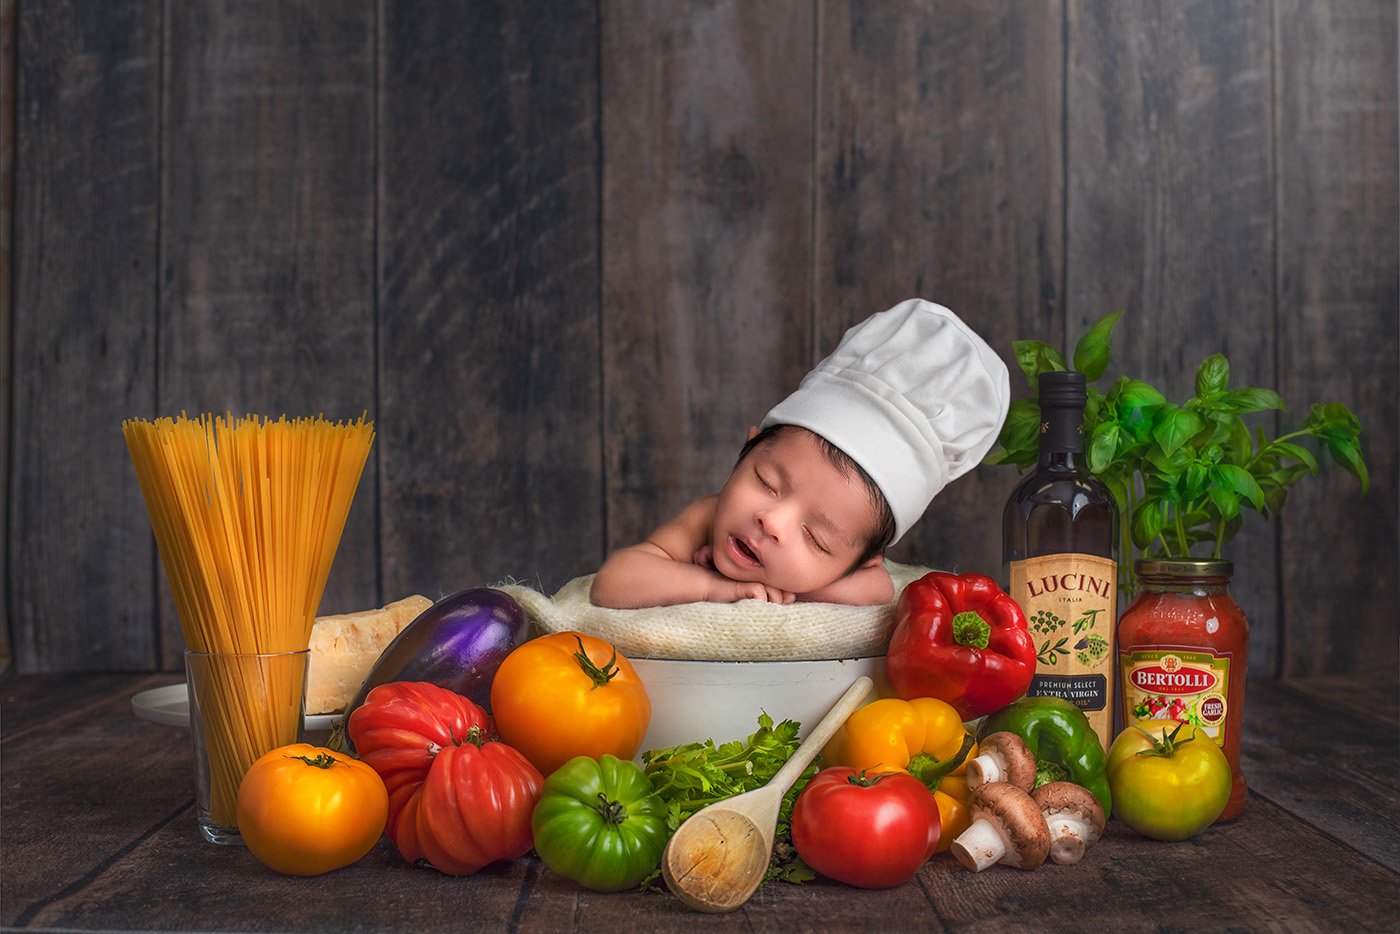 Newborn sleeping in pot with Italian dinner ingredients.